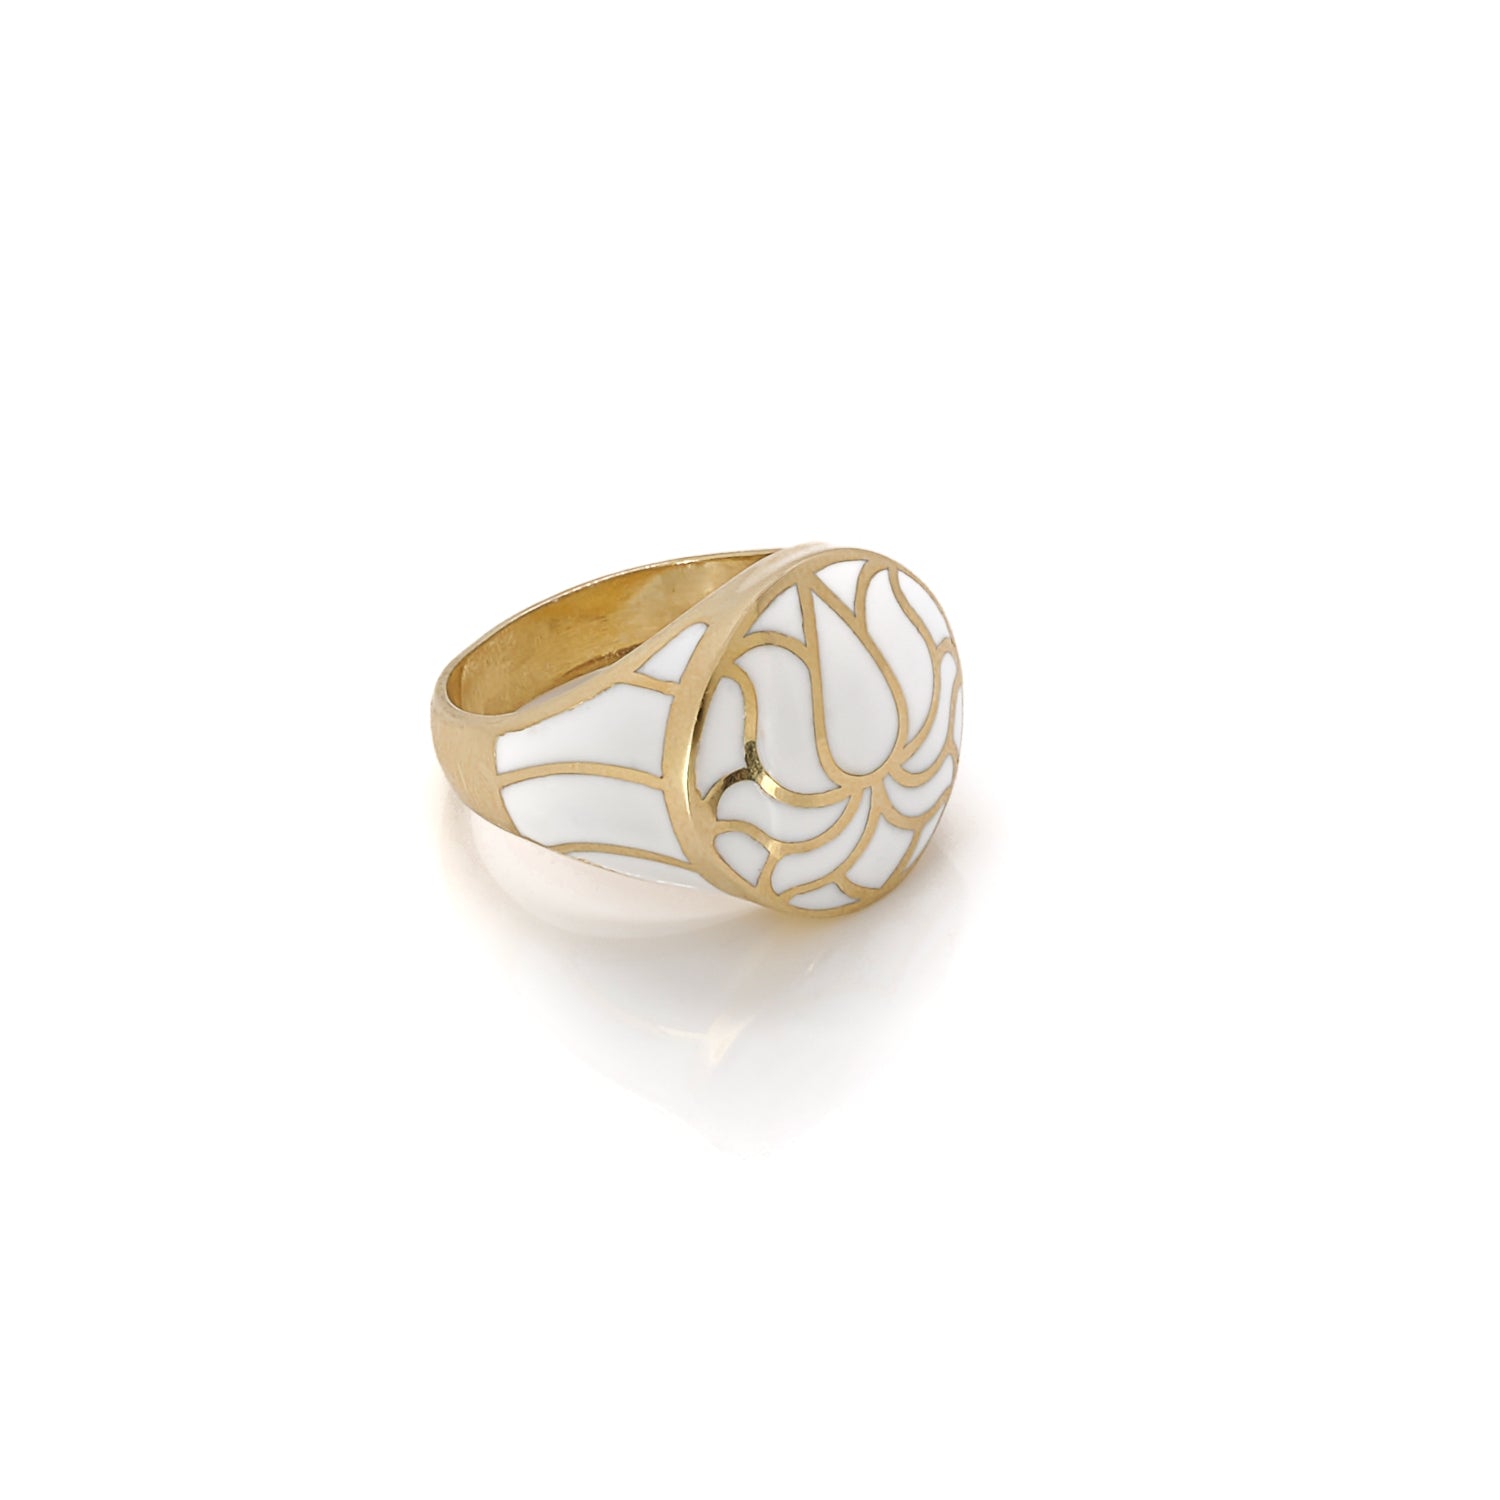 Lotus Blossom Ring - Sterling Silver & Enamel, Handmade in USA